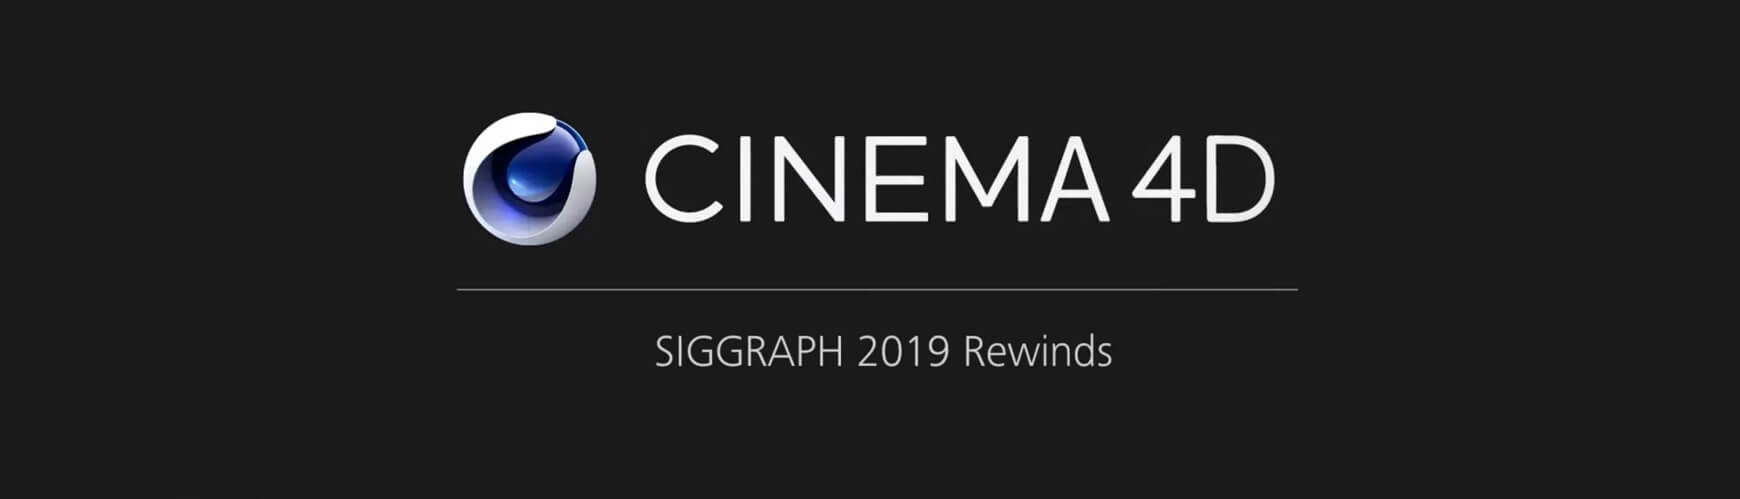 Cinema 4D 3D Free Training Siggraph 2019